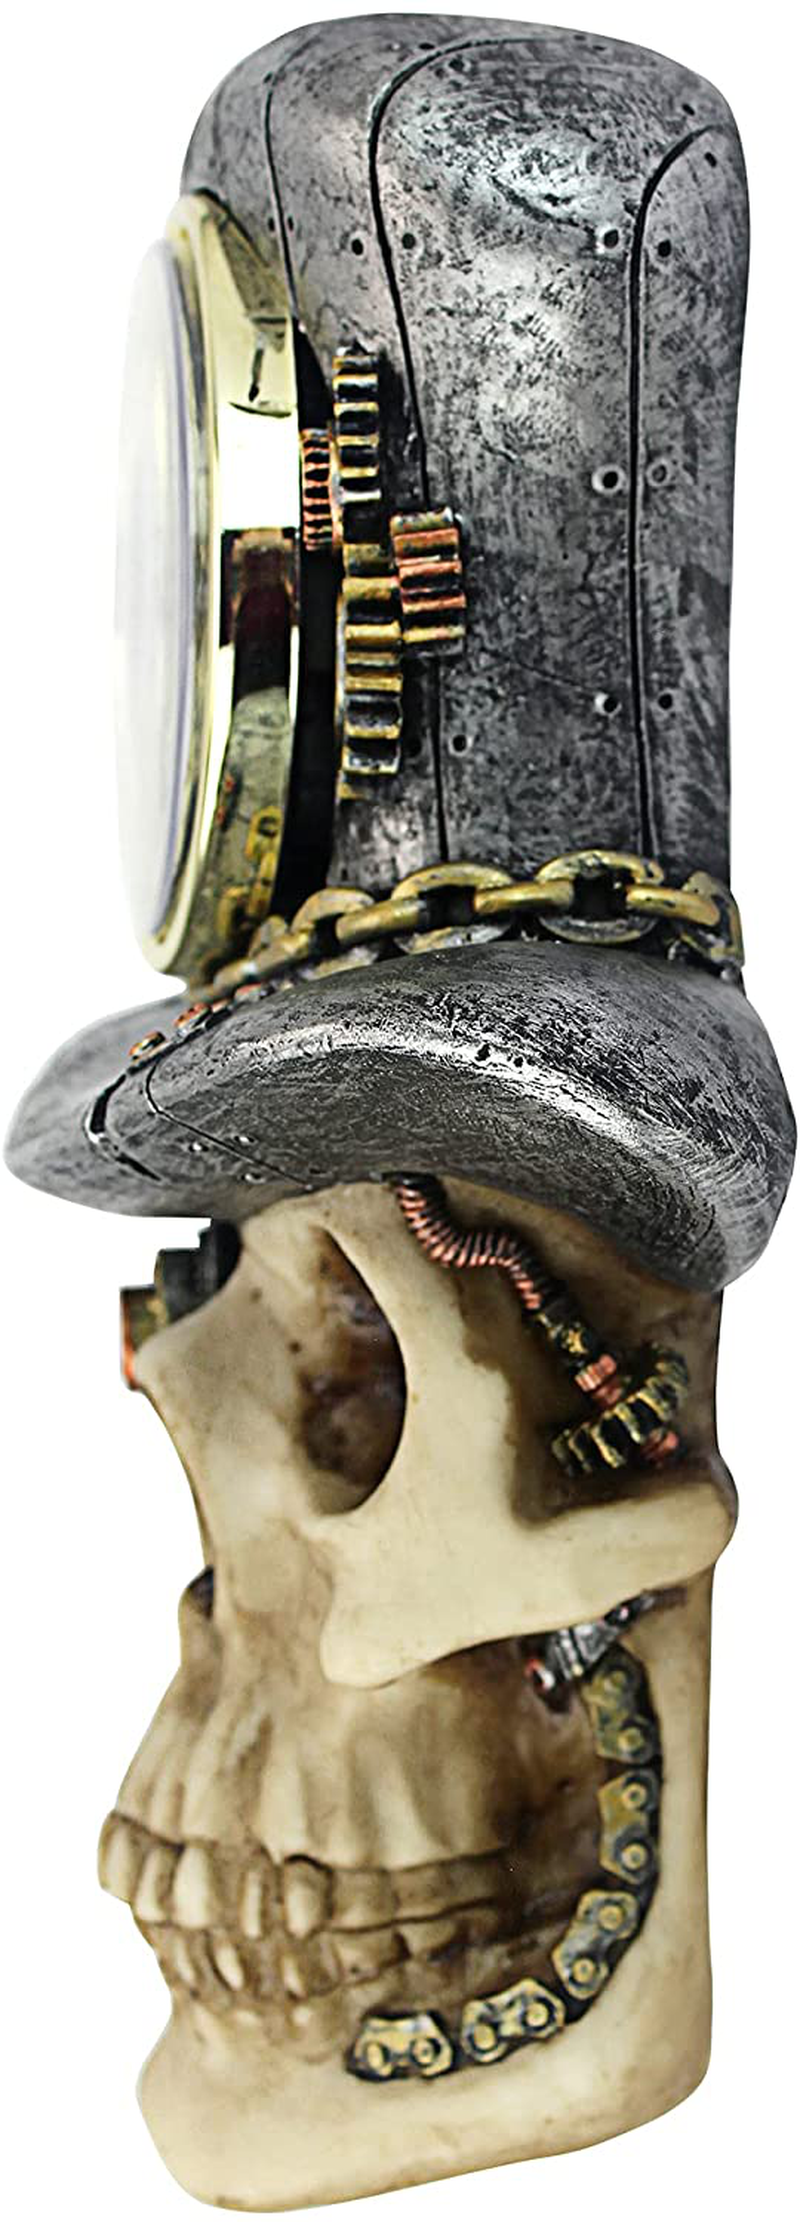 Design Toscano Steampunk Mad Hatter Skull Sculptural Wall Clock, Full Color